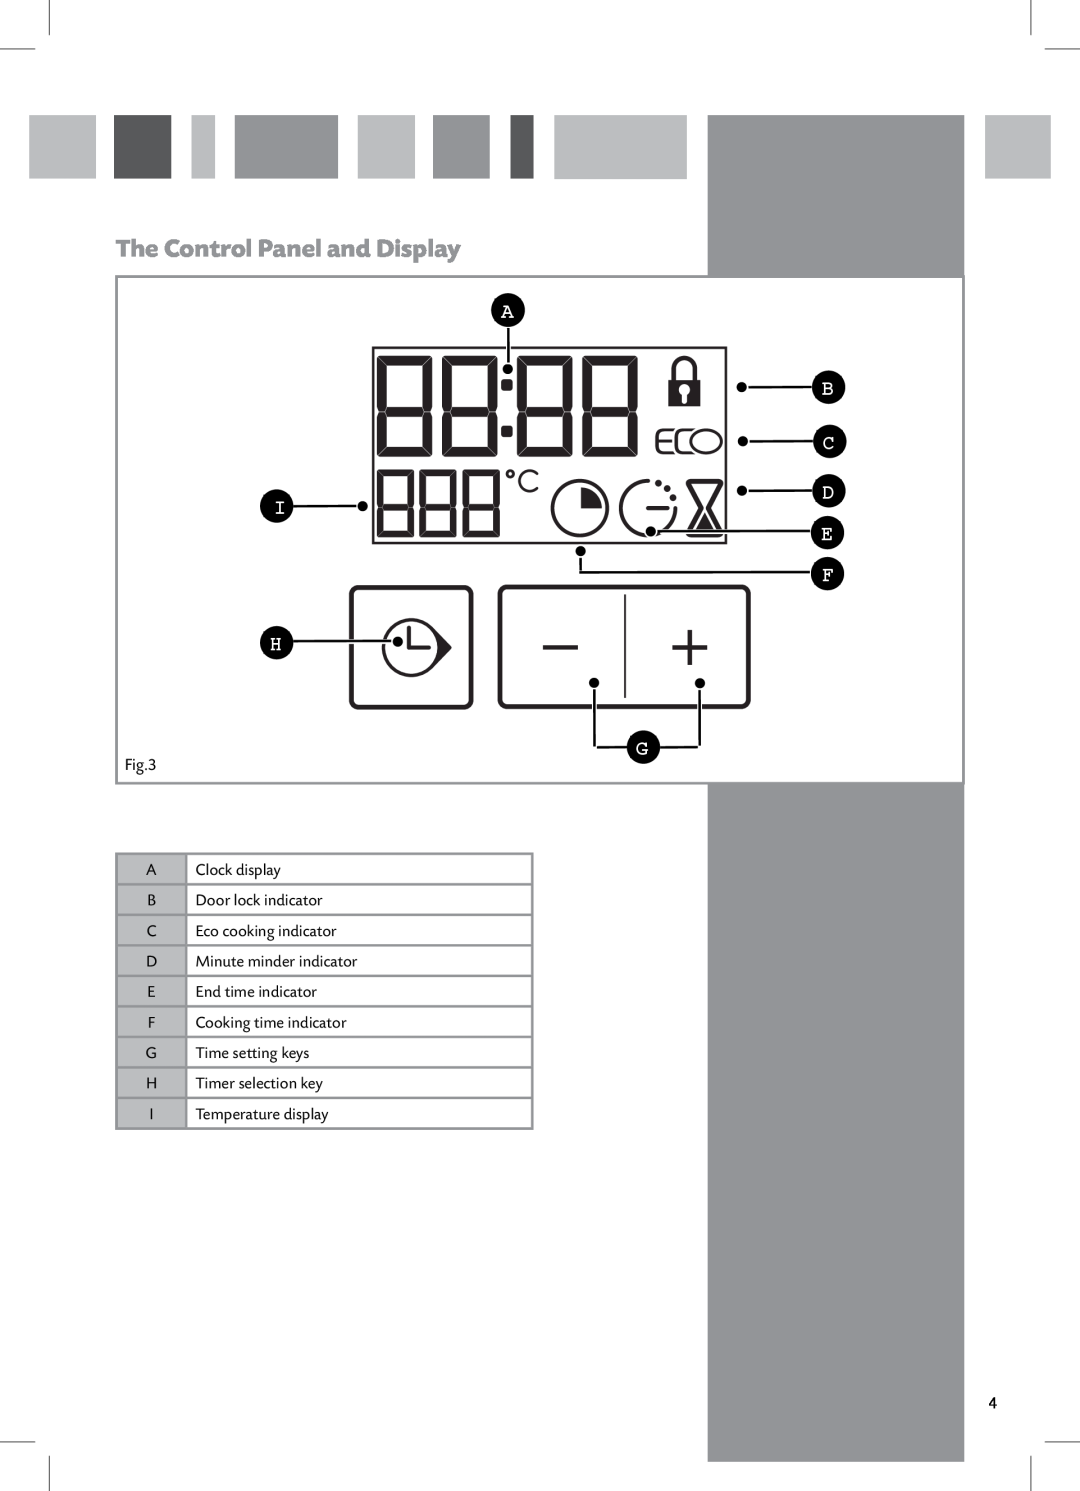 CDA SV500 manual The Control Panel and Display, A B C I D E F H G 